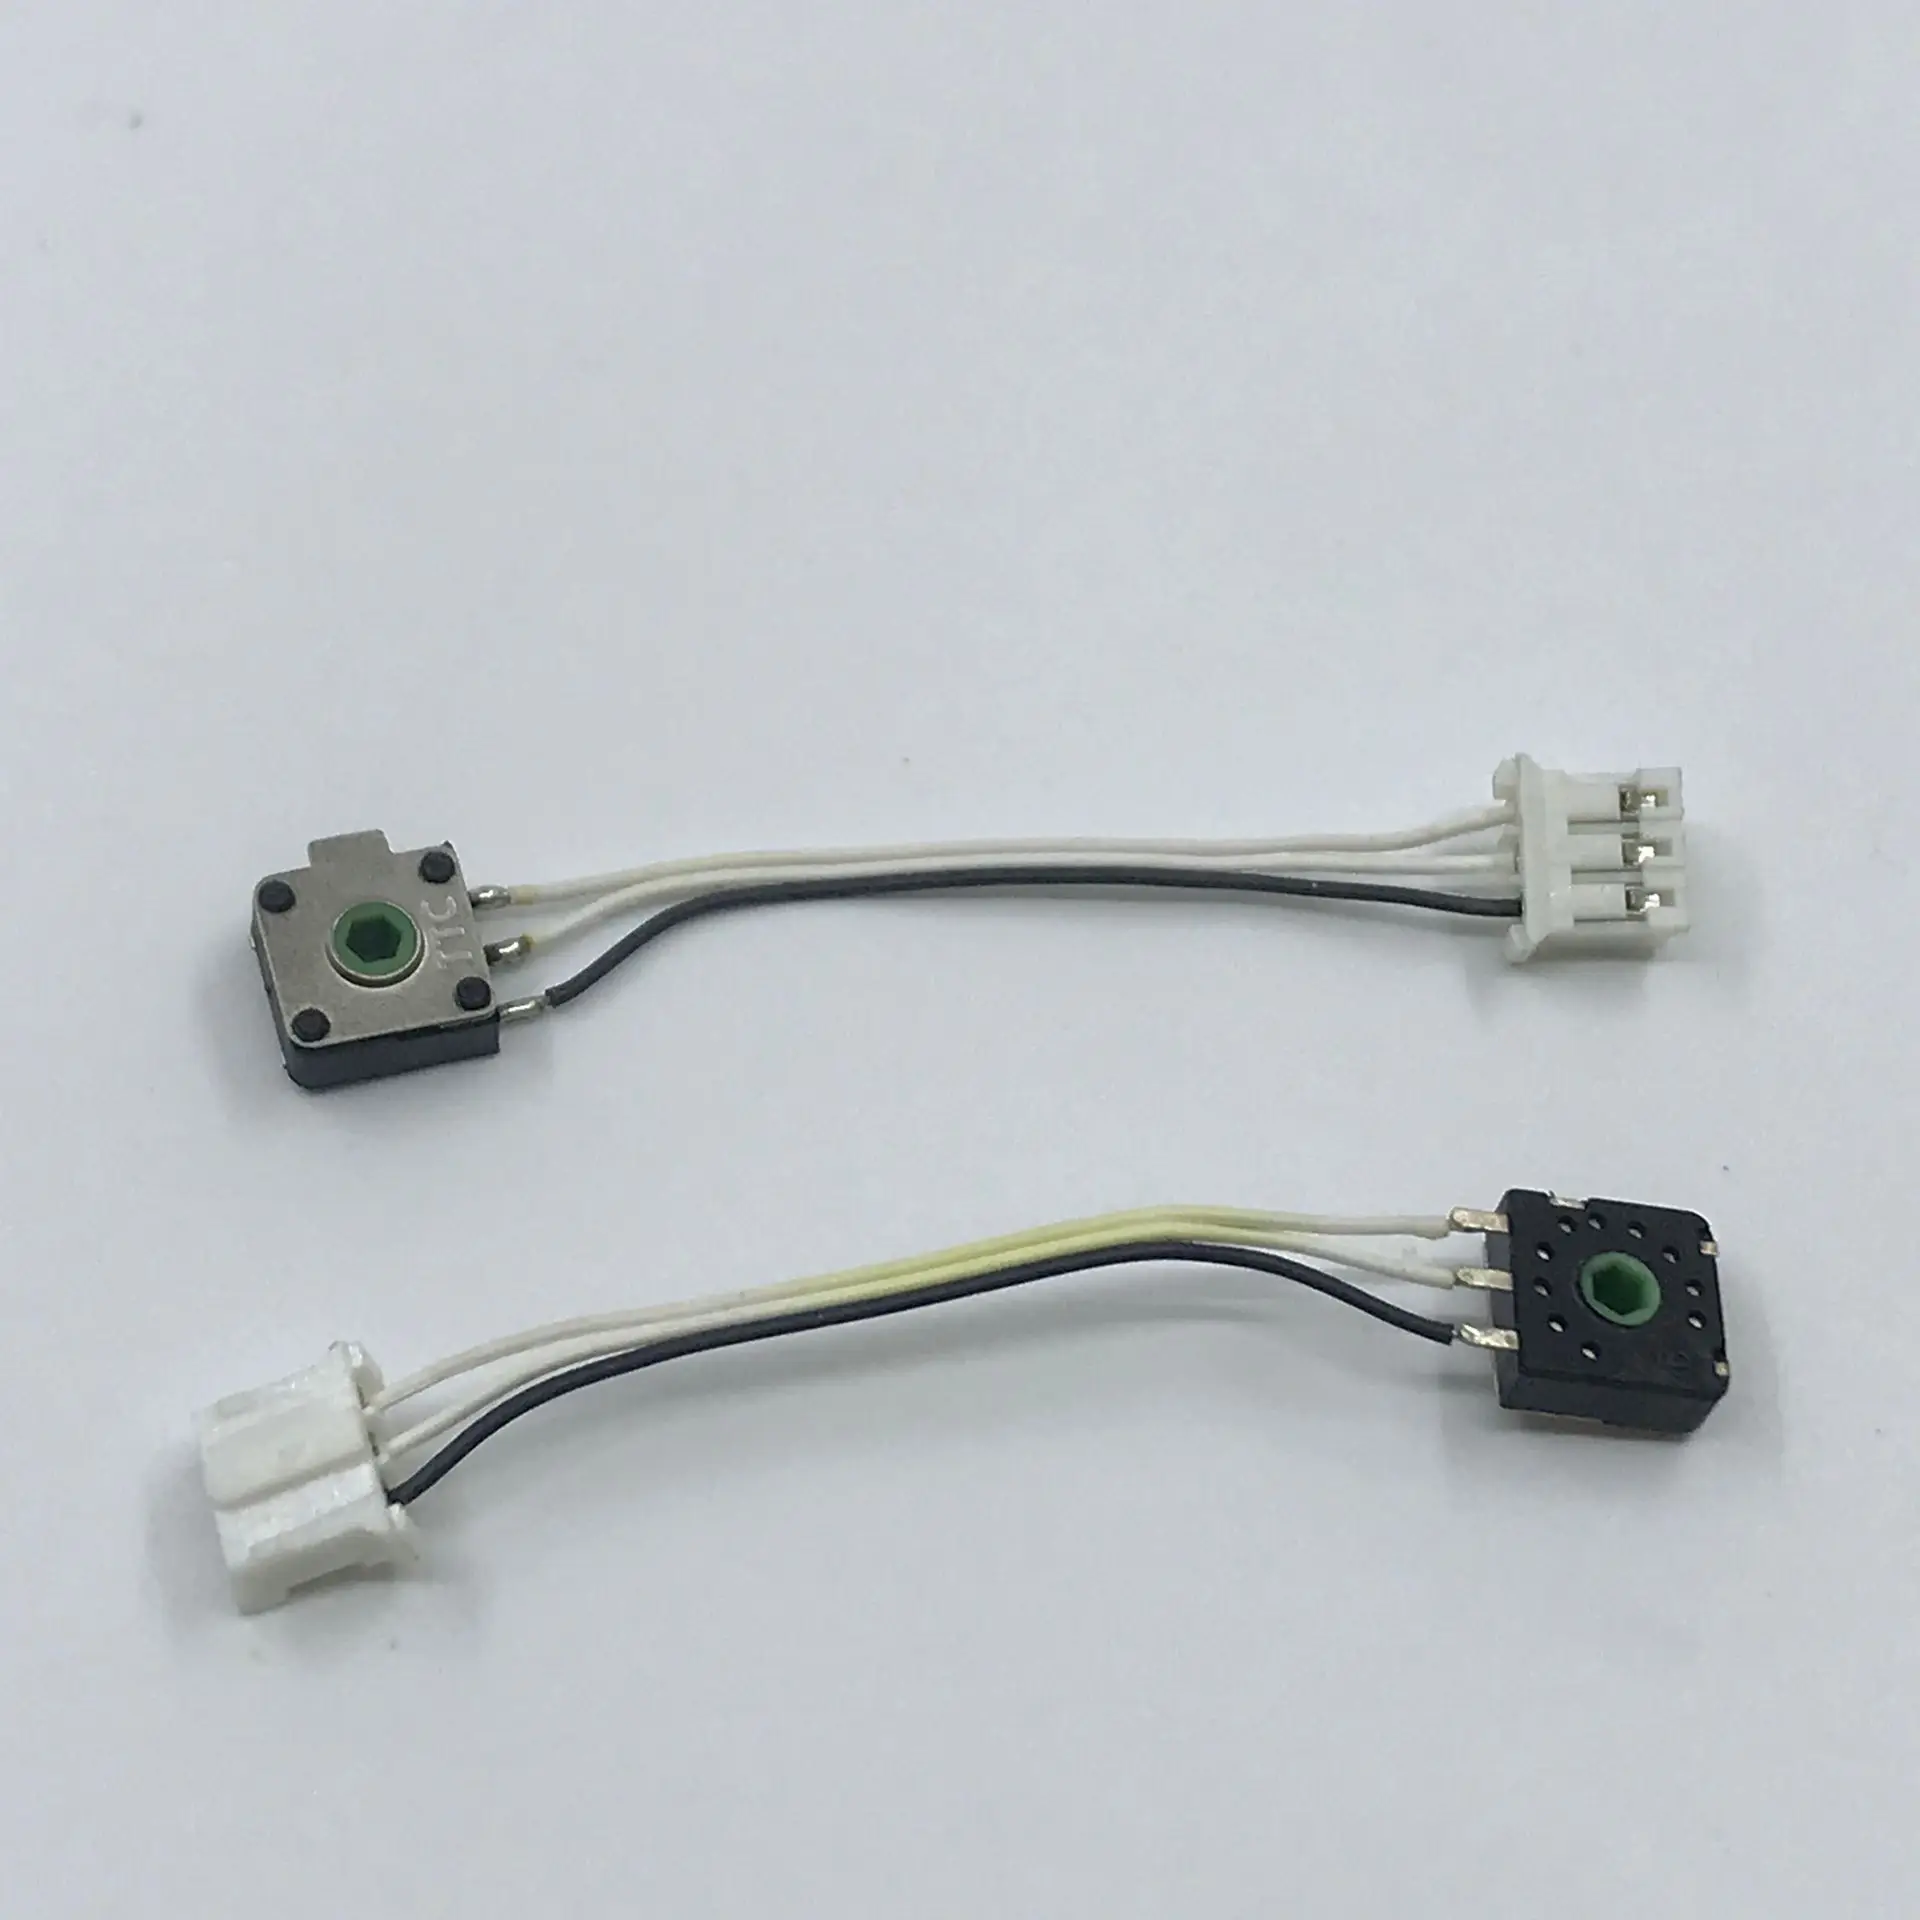 

2Pcs TTC Mouse Wheel Encoder for Razer Naga 2014 / Hex V2 / Mamba 5G / Epic Chroma / 2.0mm Connector With Wire Encoder